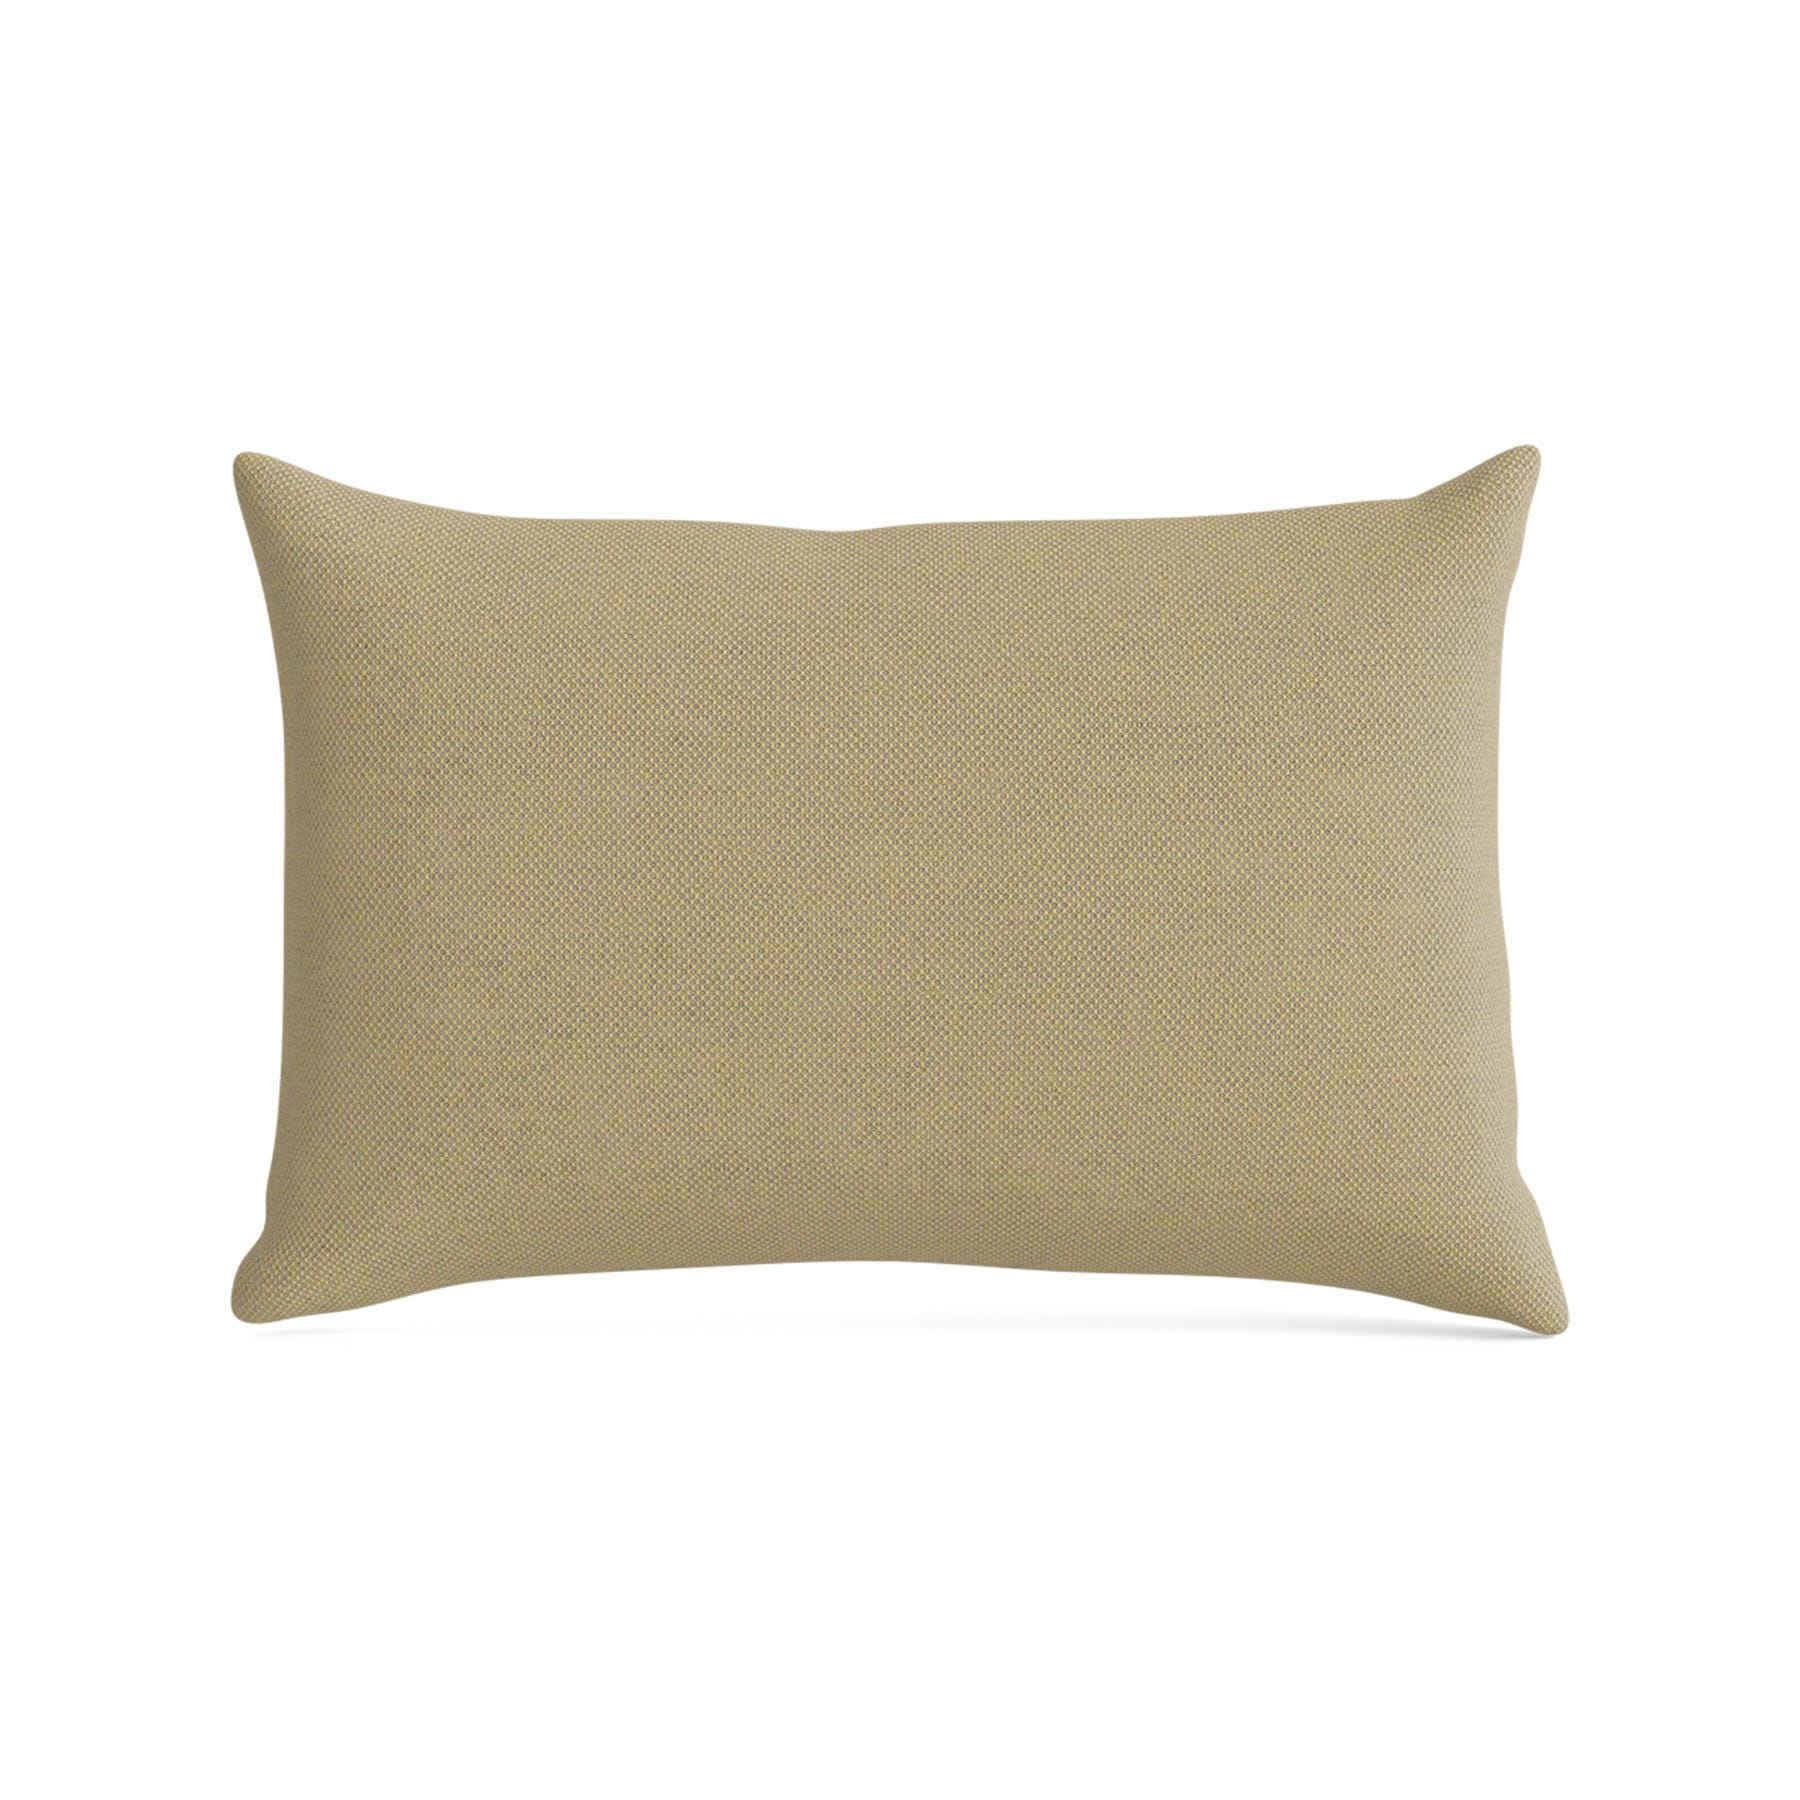 Make Nordic Pillow 40cmx60cm Fiord 422 Down And Fibers Yellow